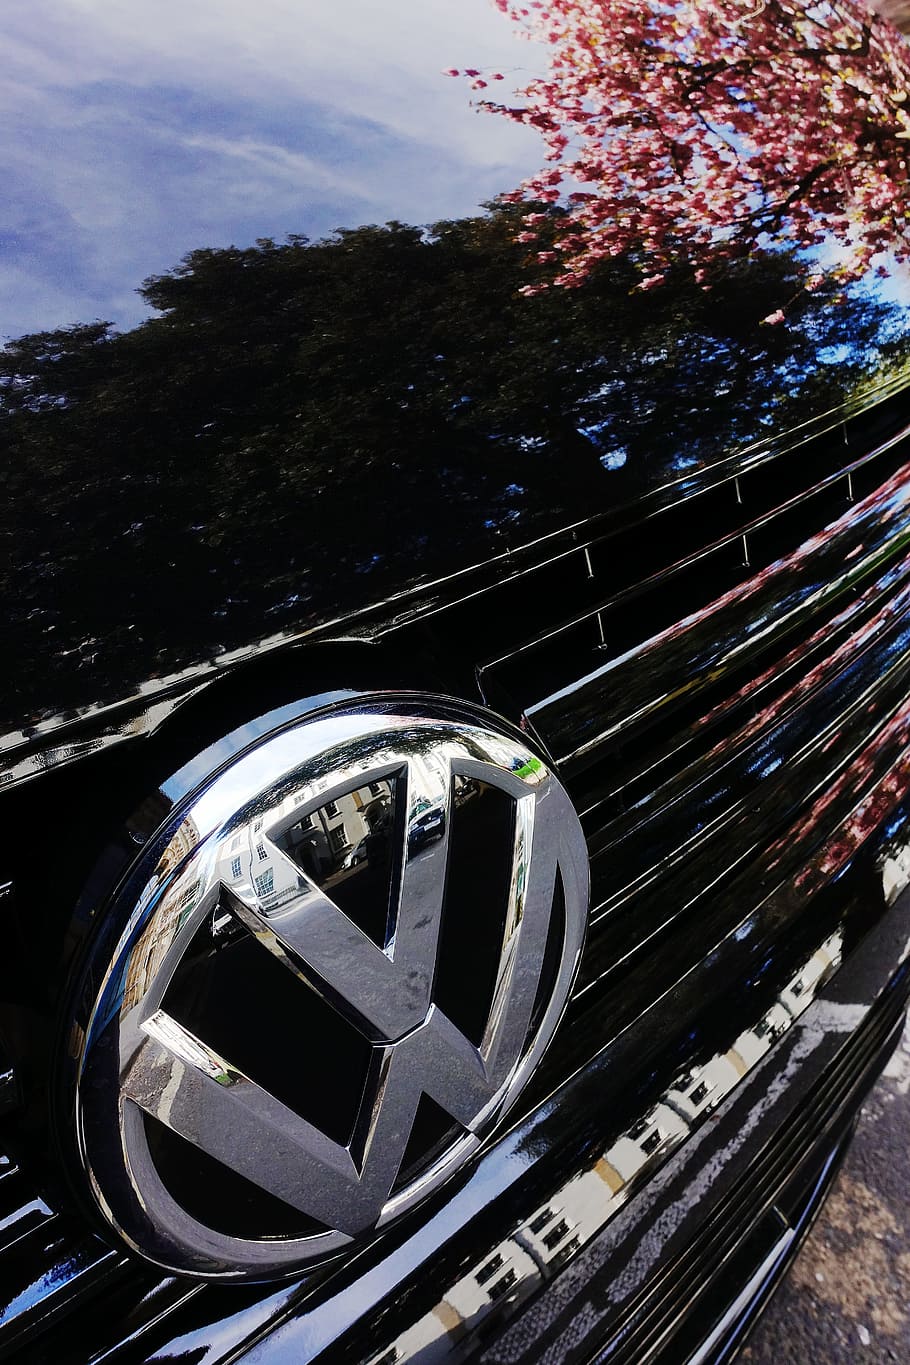 Volkswagen, Vw, Distintivo, Marque, reflexão, preto, cereja, árvore, flor, primavera